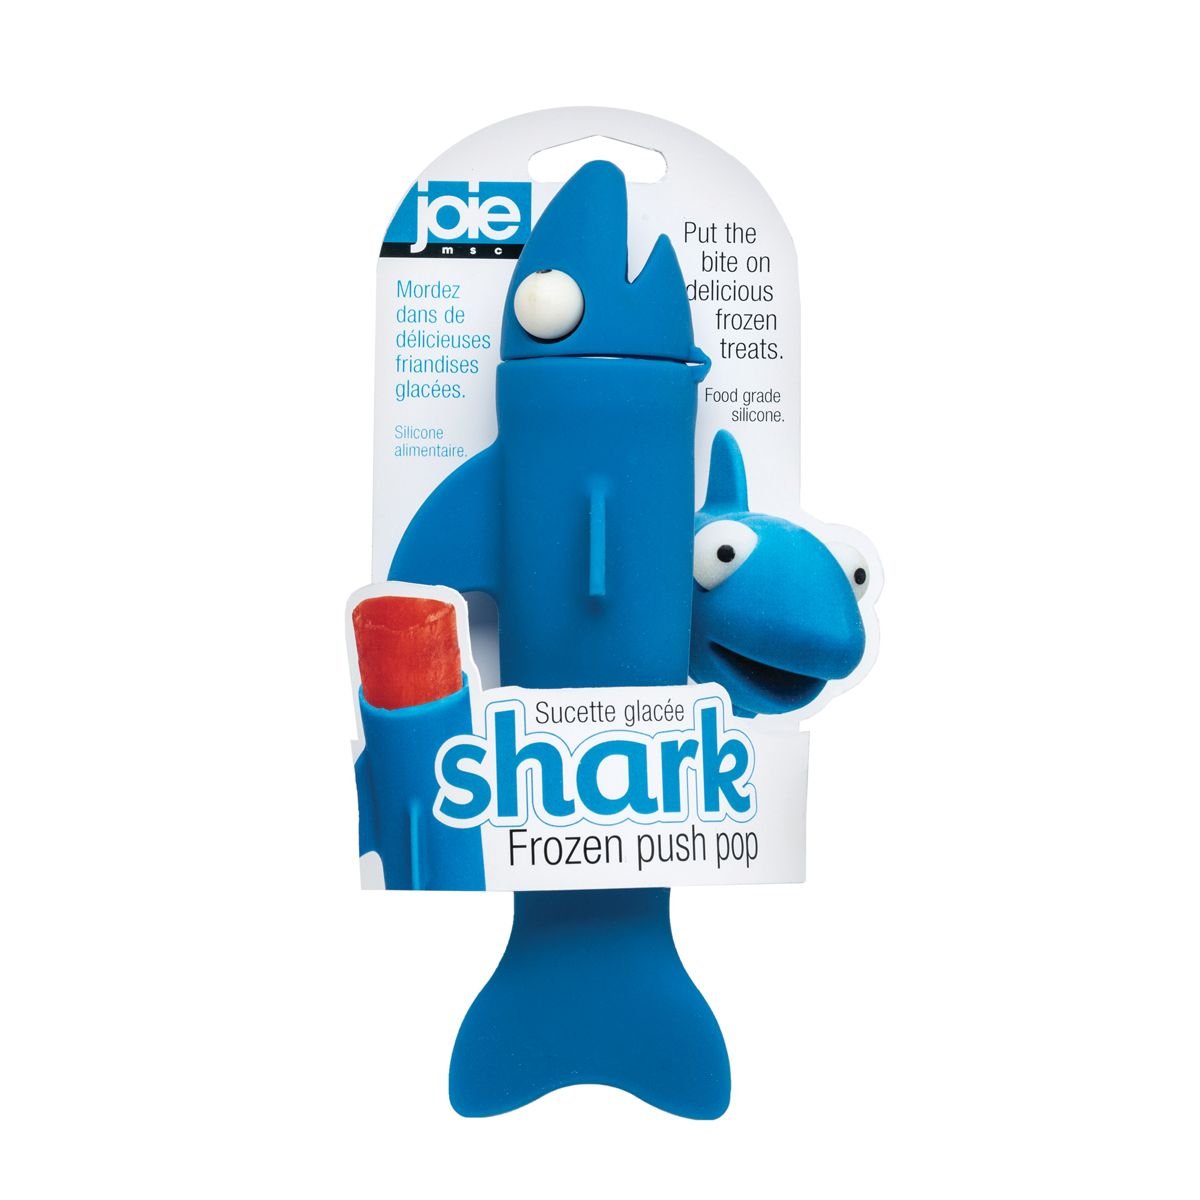 Joie Shark Frozen Push Pop Maker, Non-Stick Silicone, Flexible and Reusable